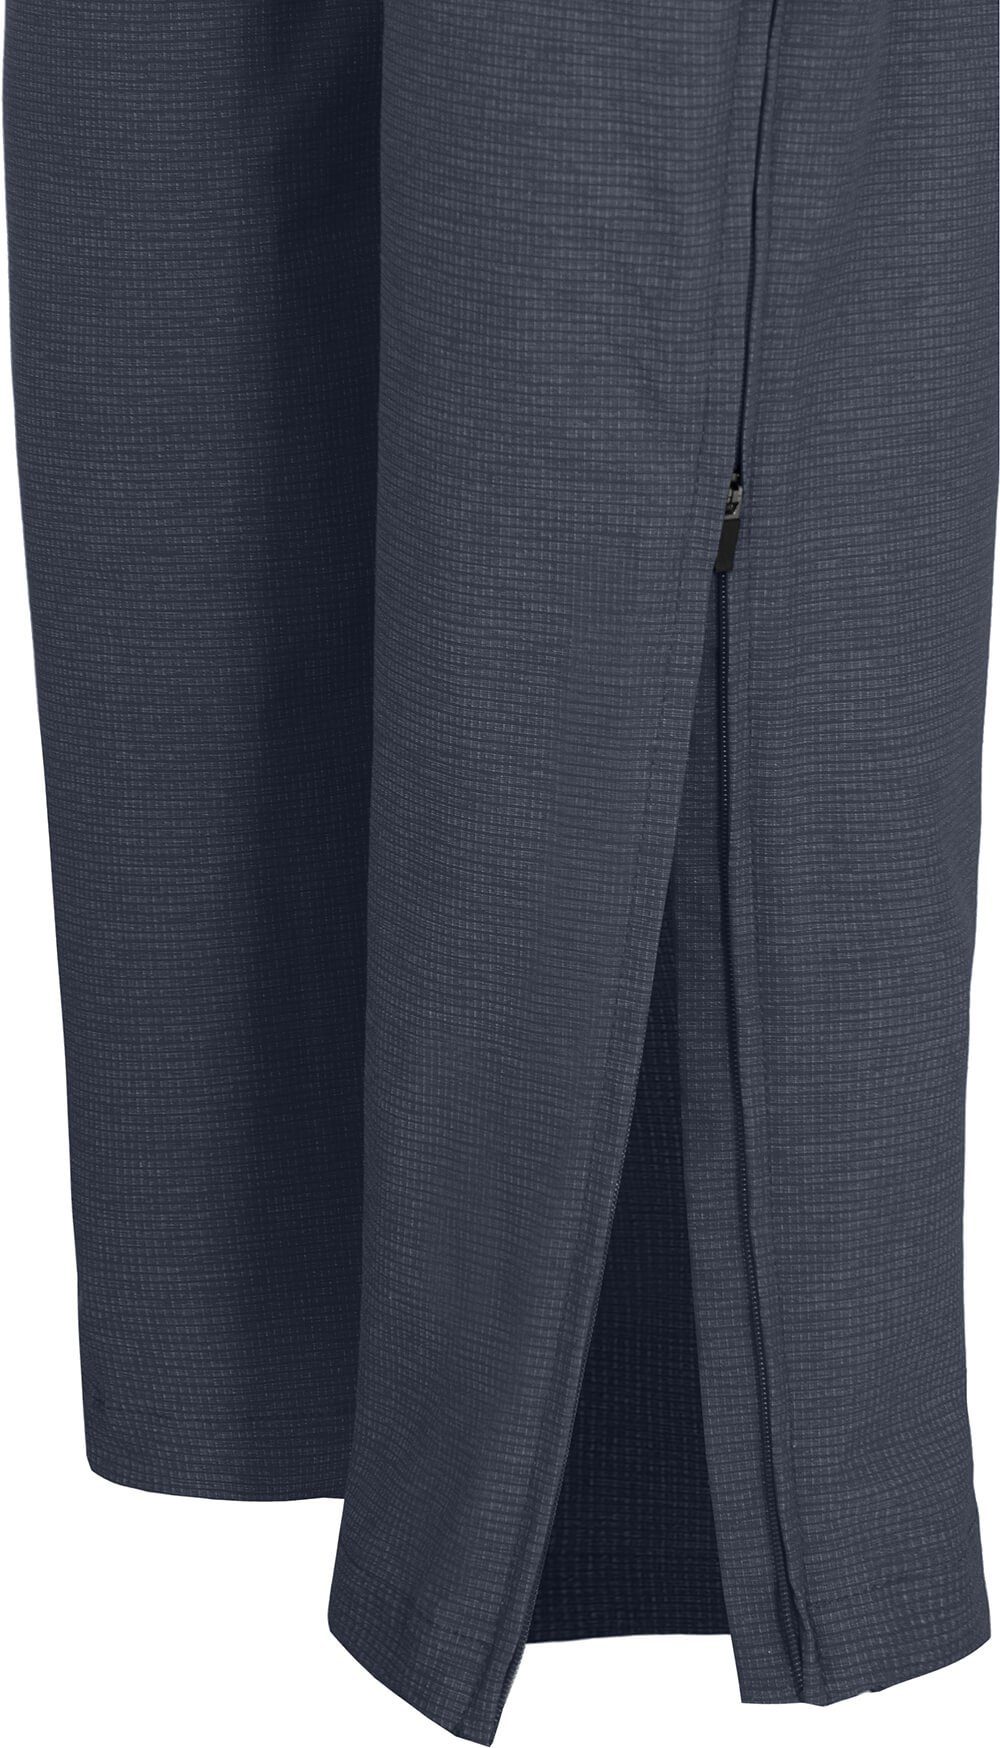 grau/blau Damen Wanderhose, robust Zip-off-Hose Doppel PORI mit Zipp-Off T-ZIPP Normalgrößen, Bergson elastisch,